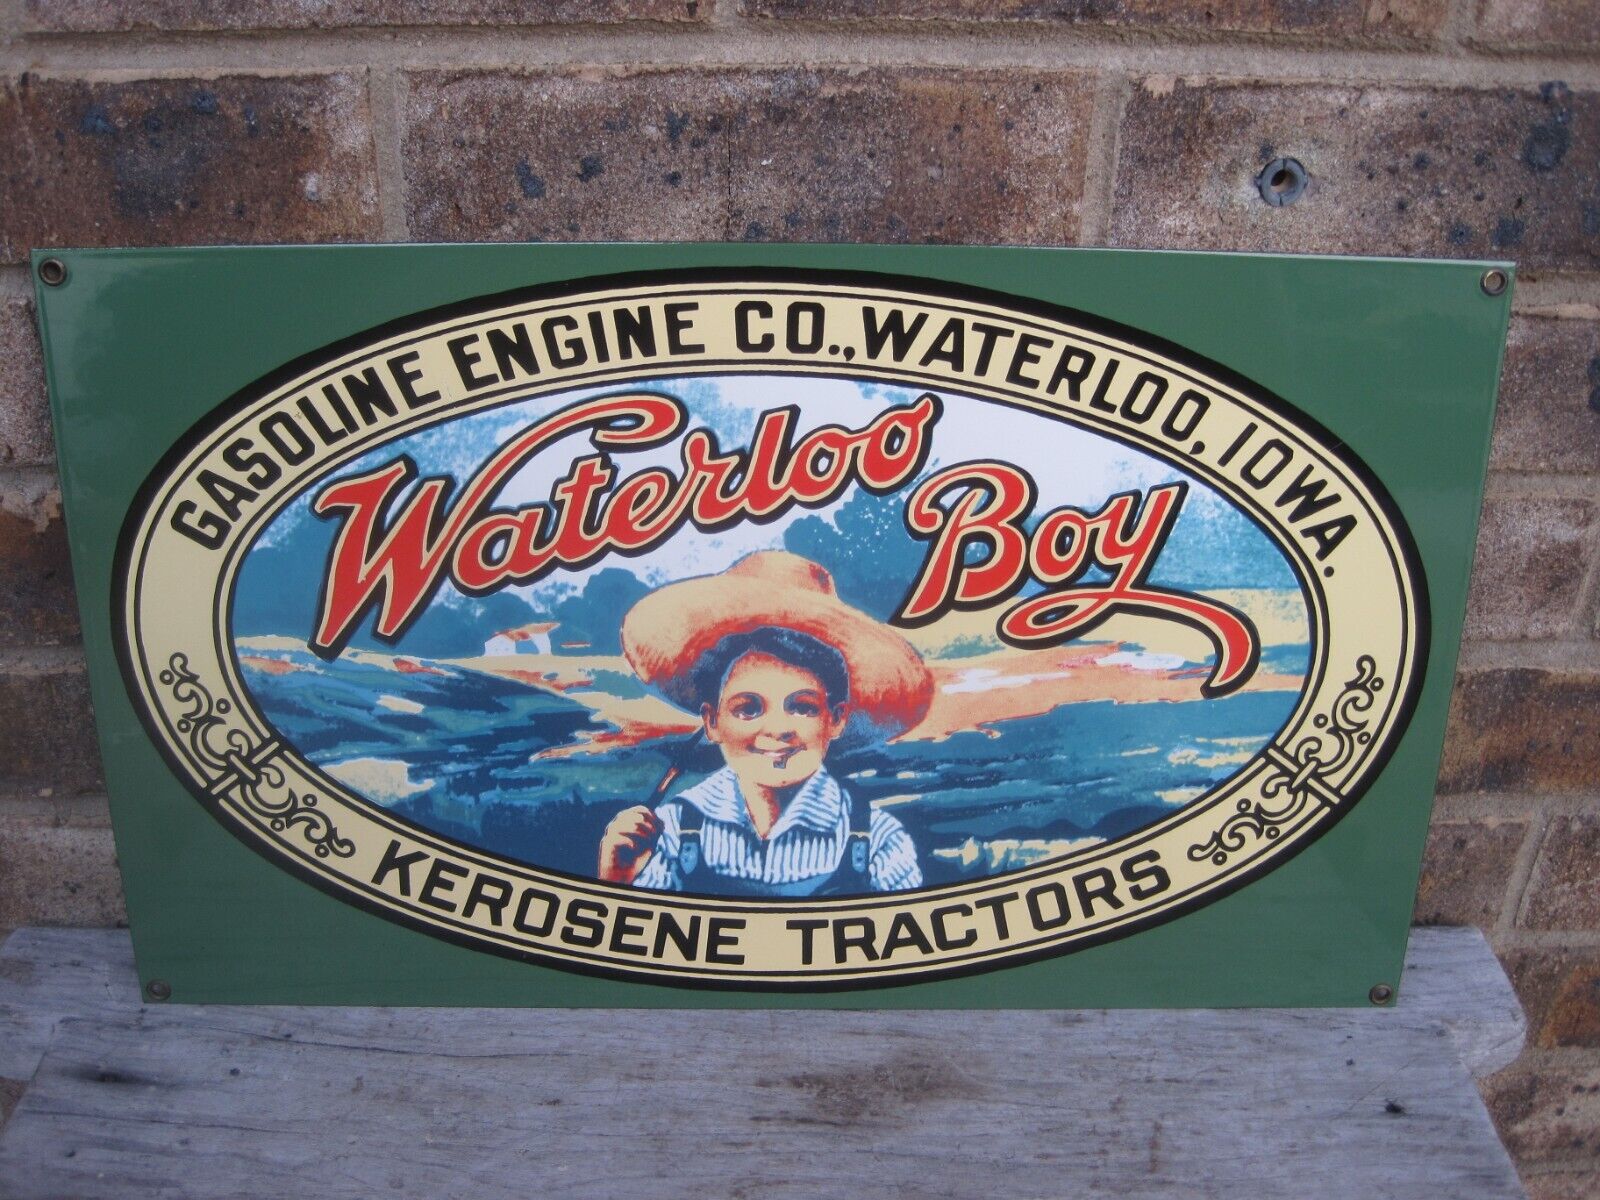 John Deere Waterloo Boy Kerosene Tractors Porcelain Enamel Sign Ande Rooney